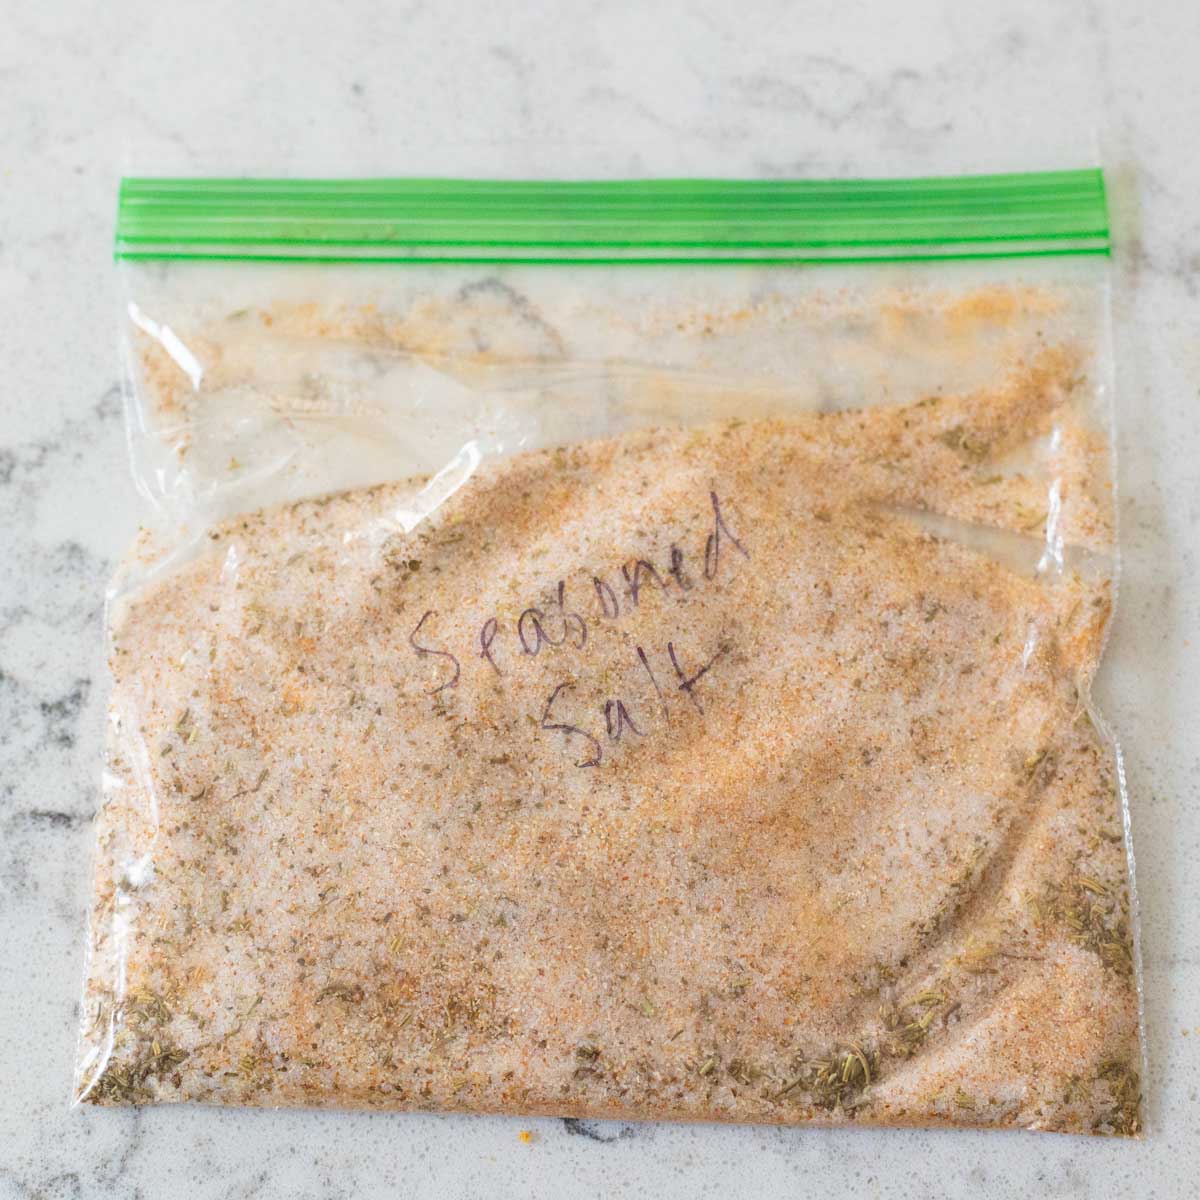 A plastic zip top baggie is labeled "Seasoned Salt" and has the salt inside.